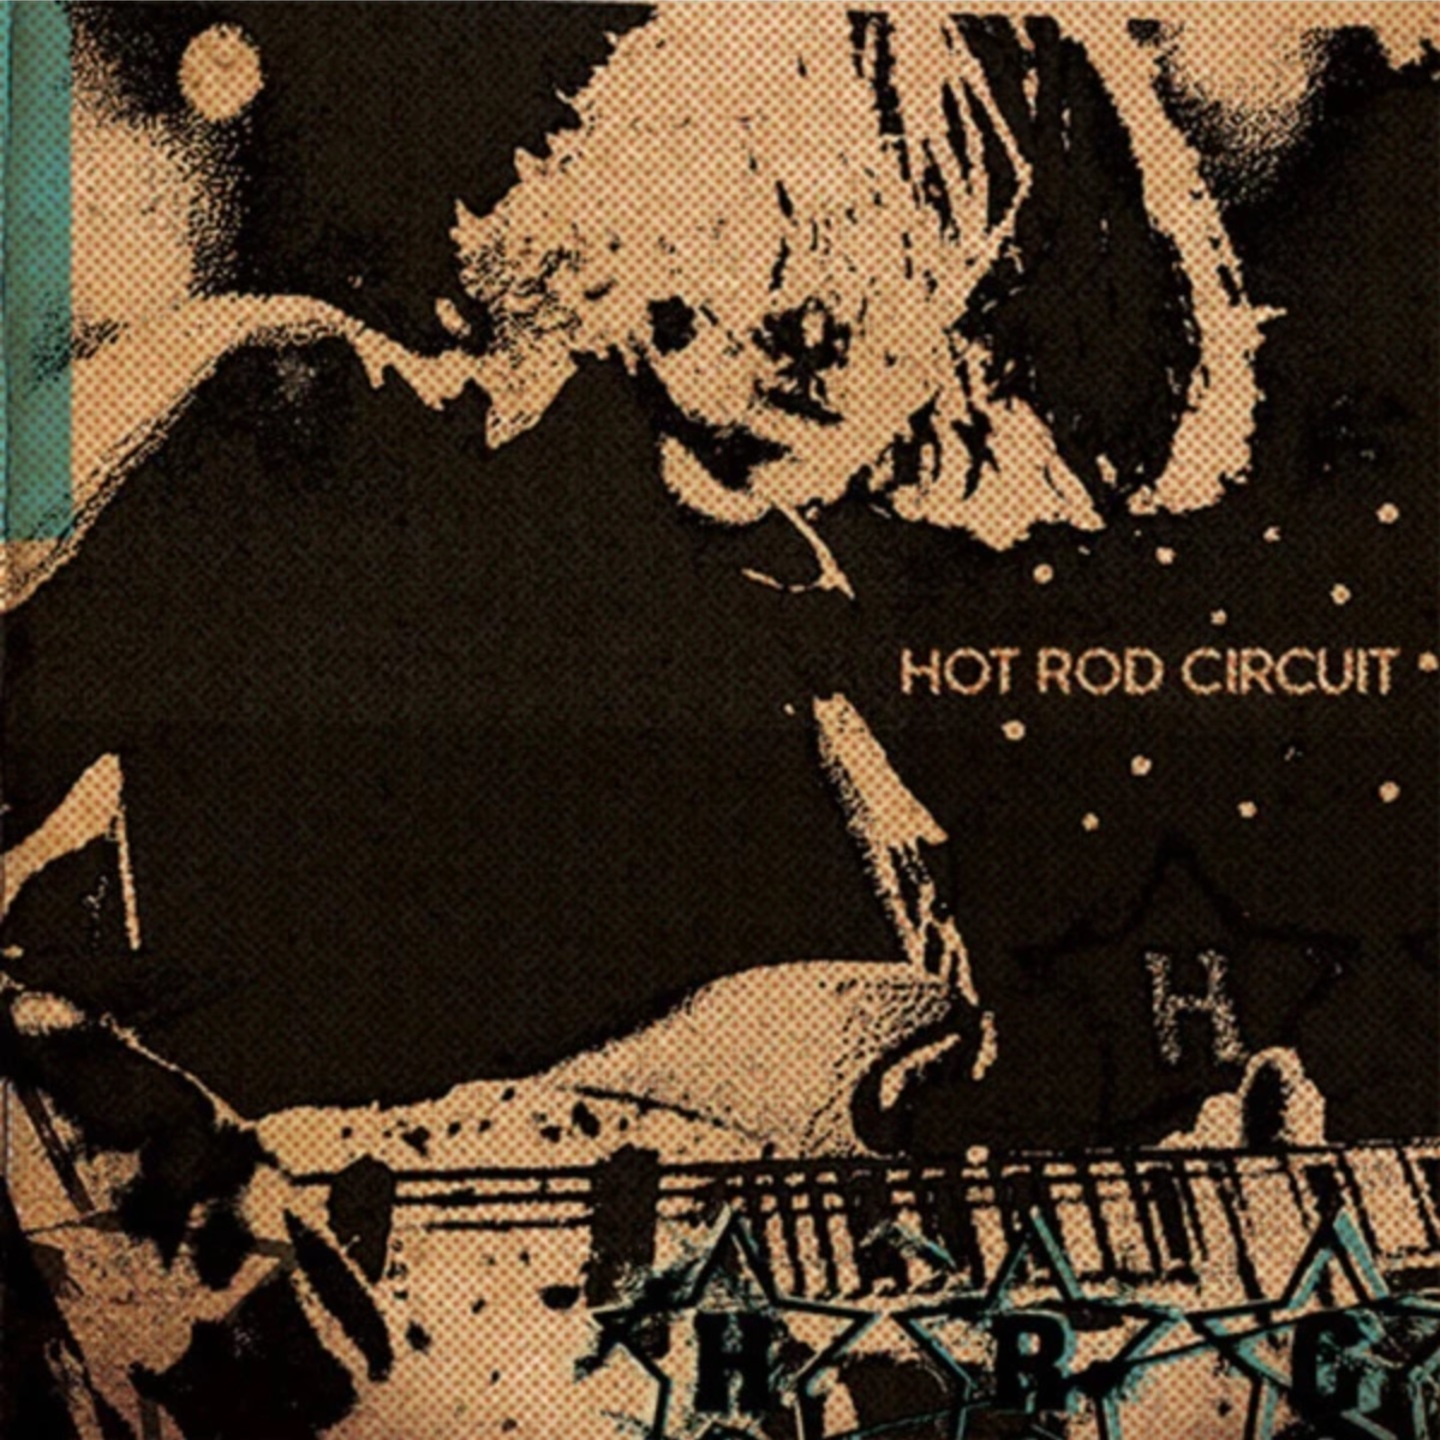 HOT ROD CIRCUIT - 3 Song 7